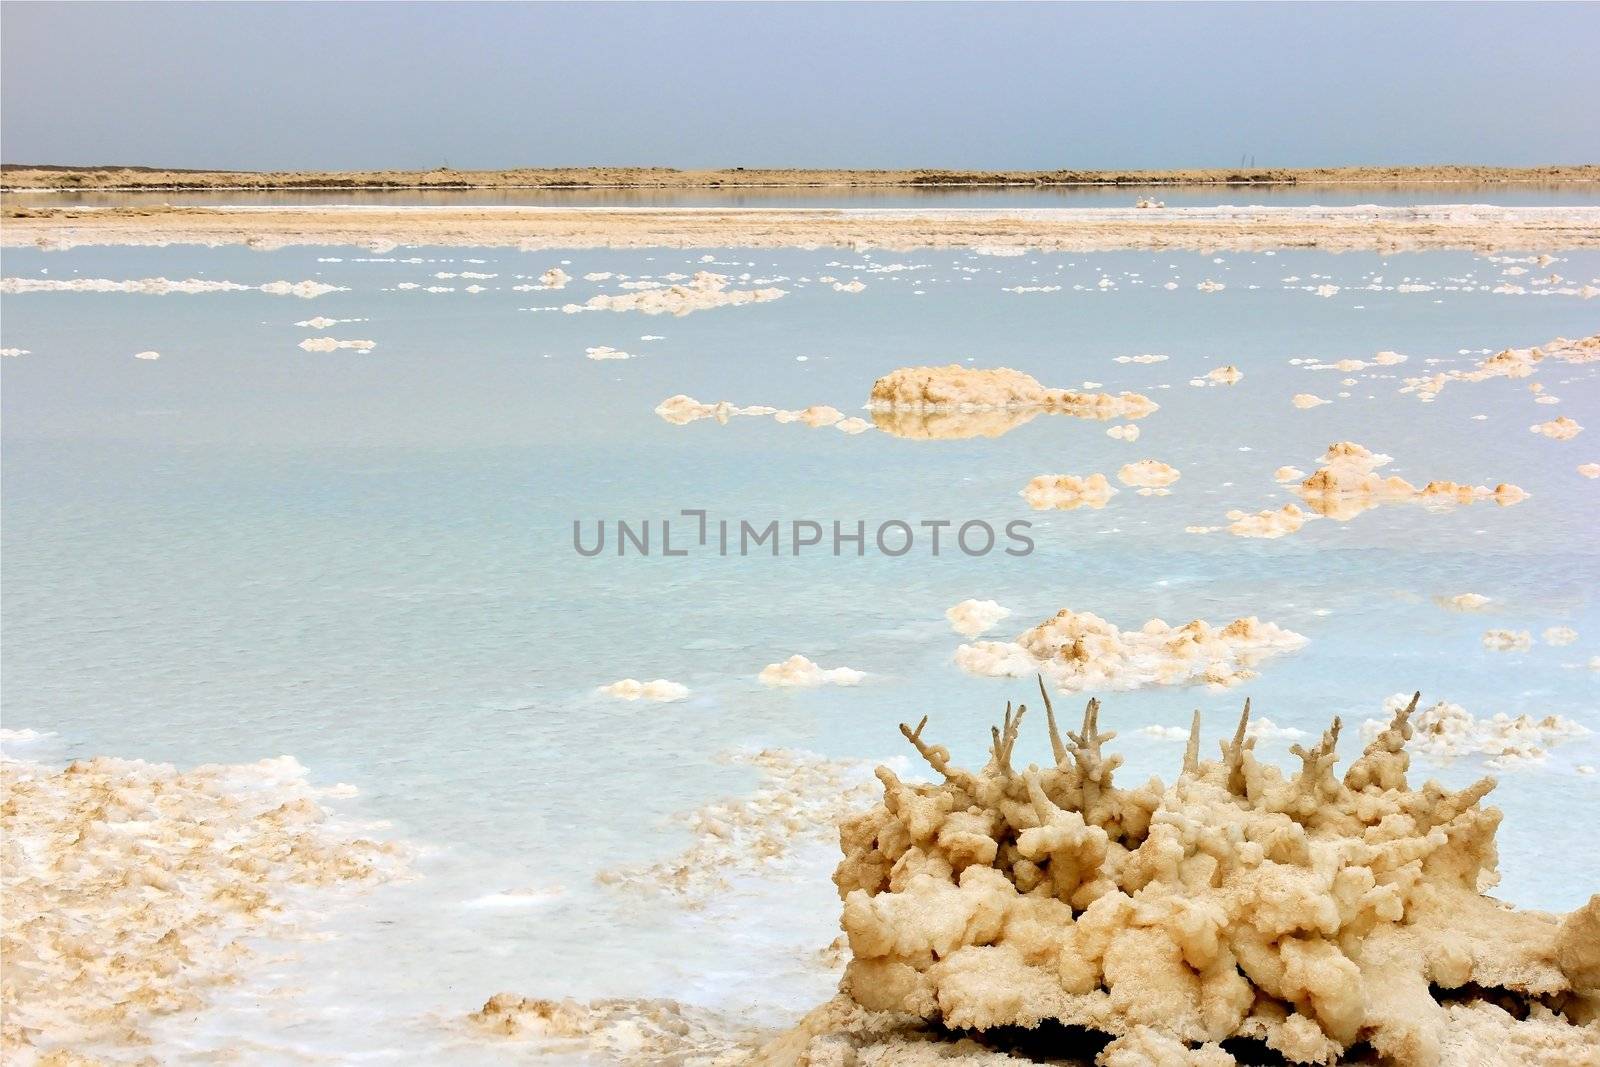 the Dead Sea,Israeli coast by irisphoto4